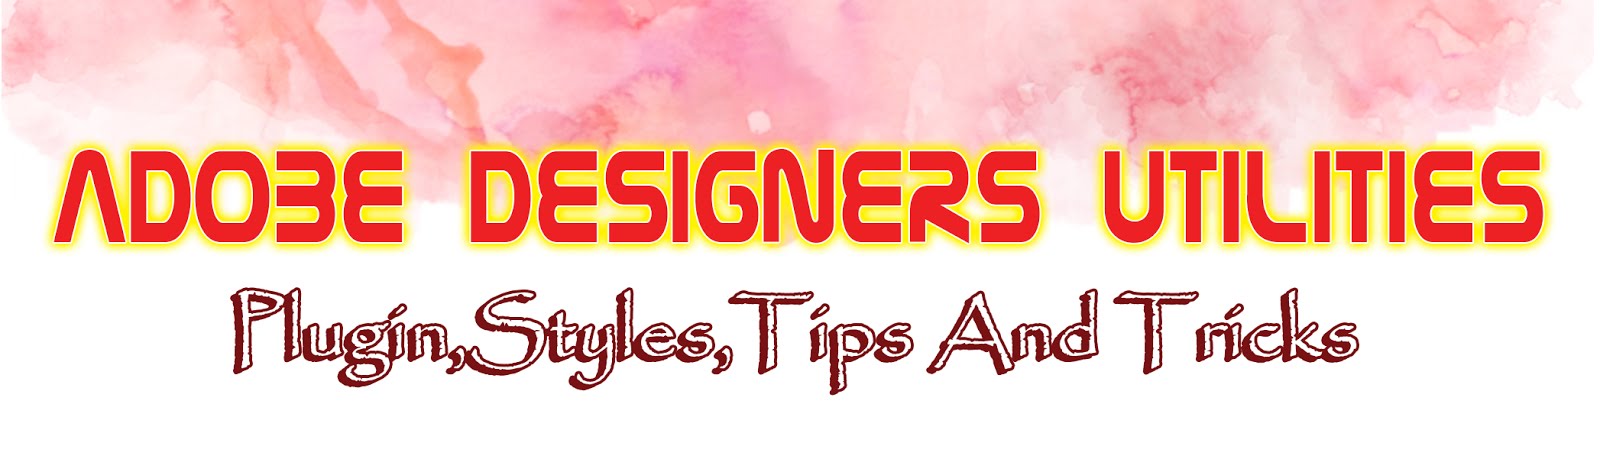 Adobe Designers Utilities-Plugin,Styles,Tips And Tricks